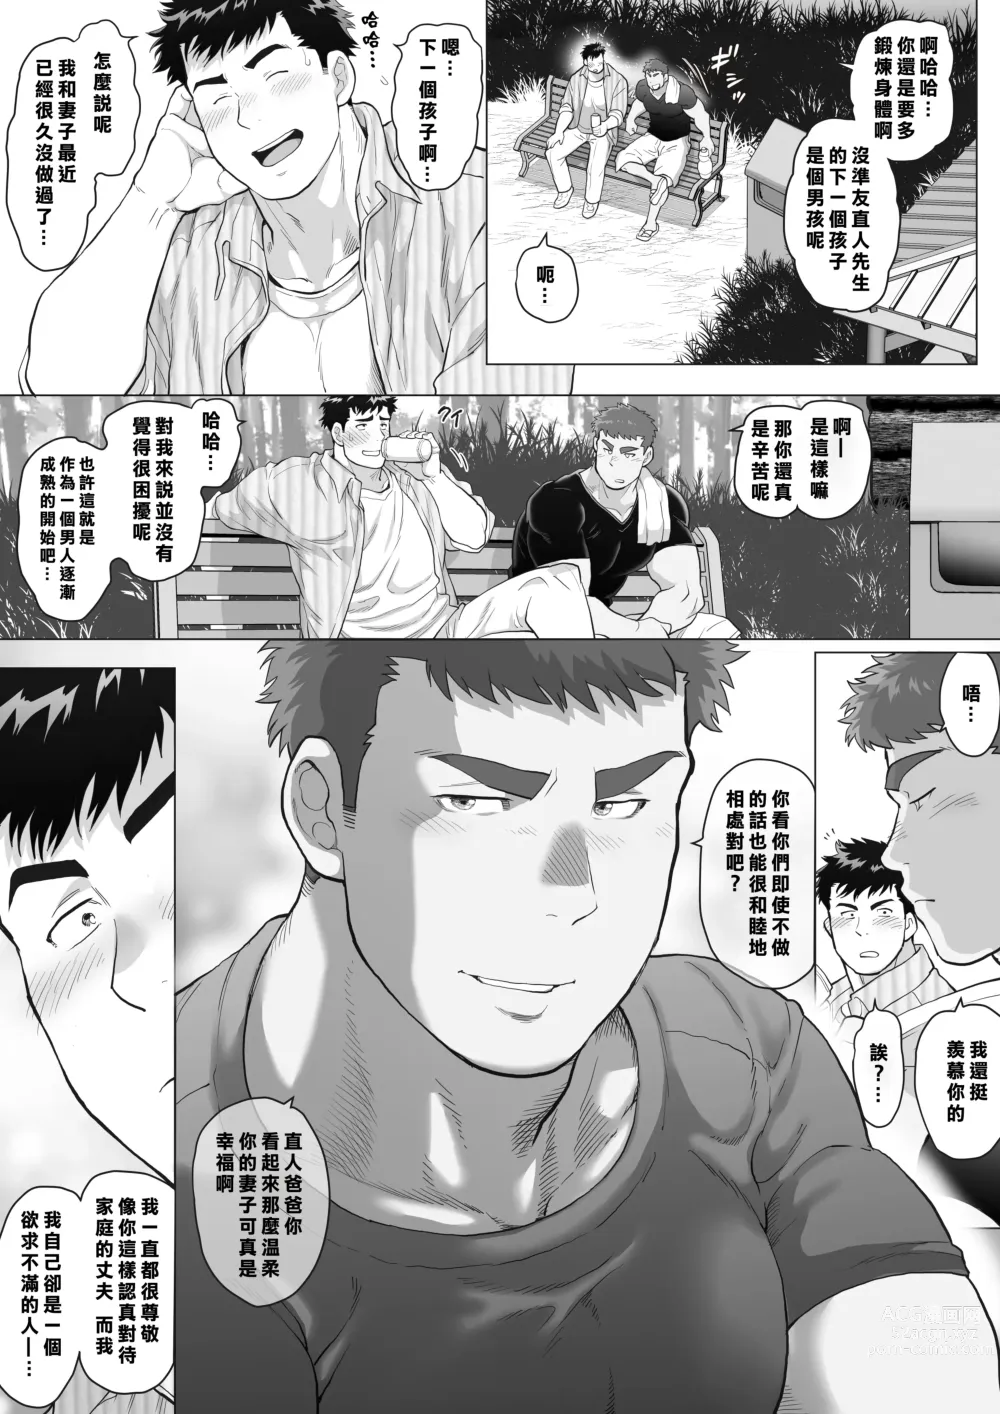 Page 8 of manga 直人爸爸与友幸爸爸 第一话